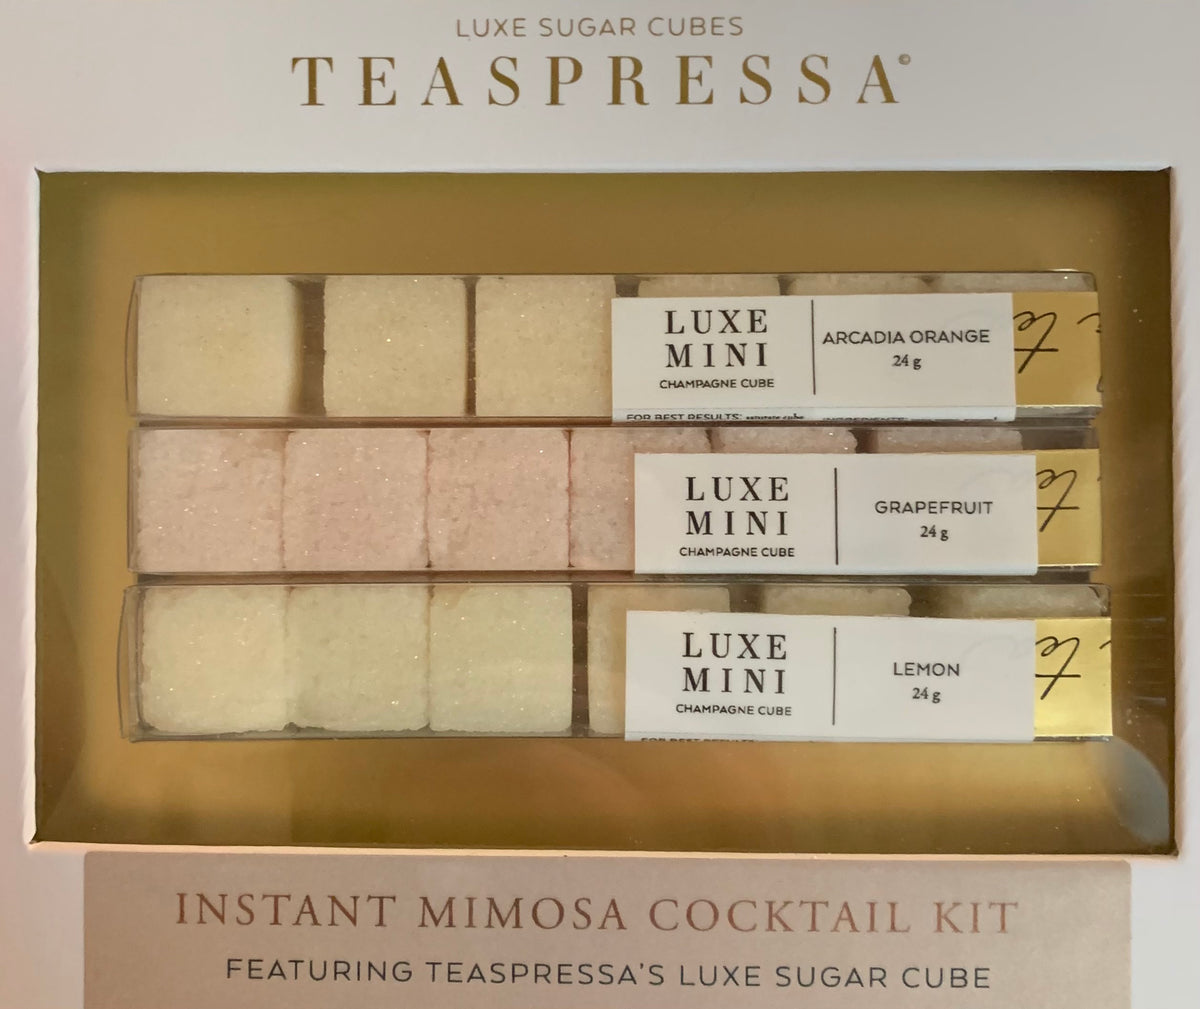 Teaspressa Instant Champagne Cocktail Kit 